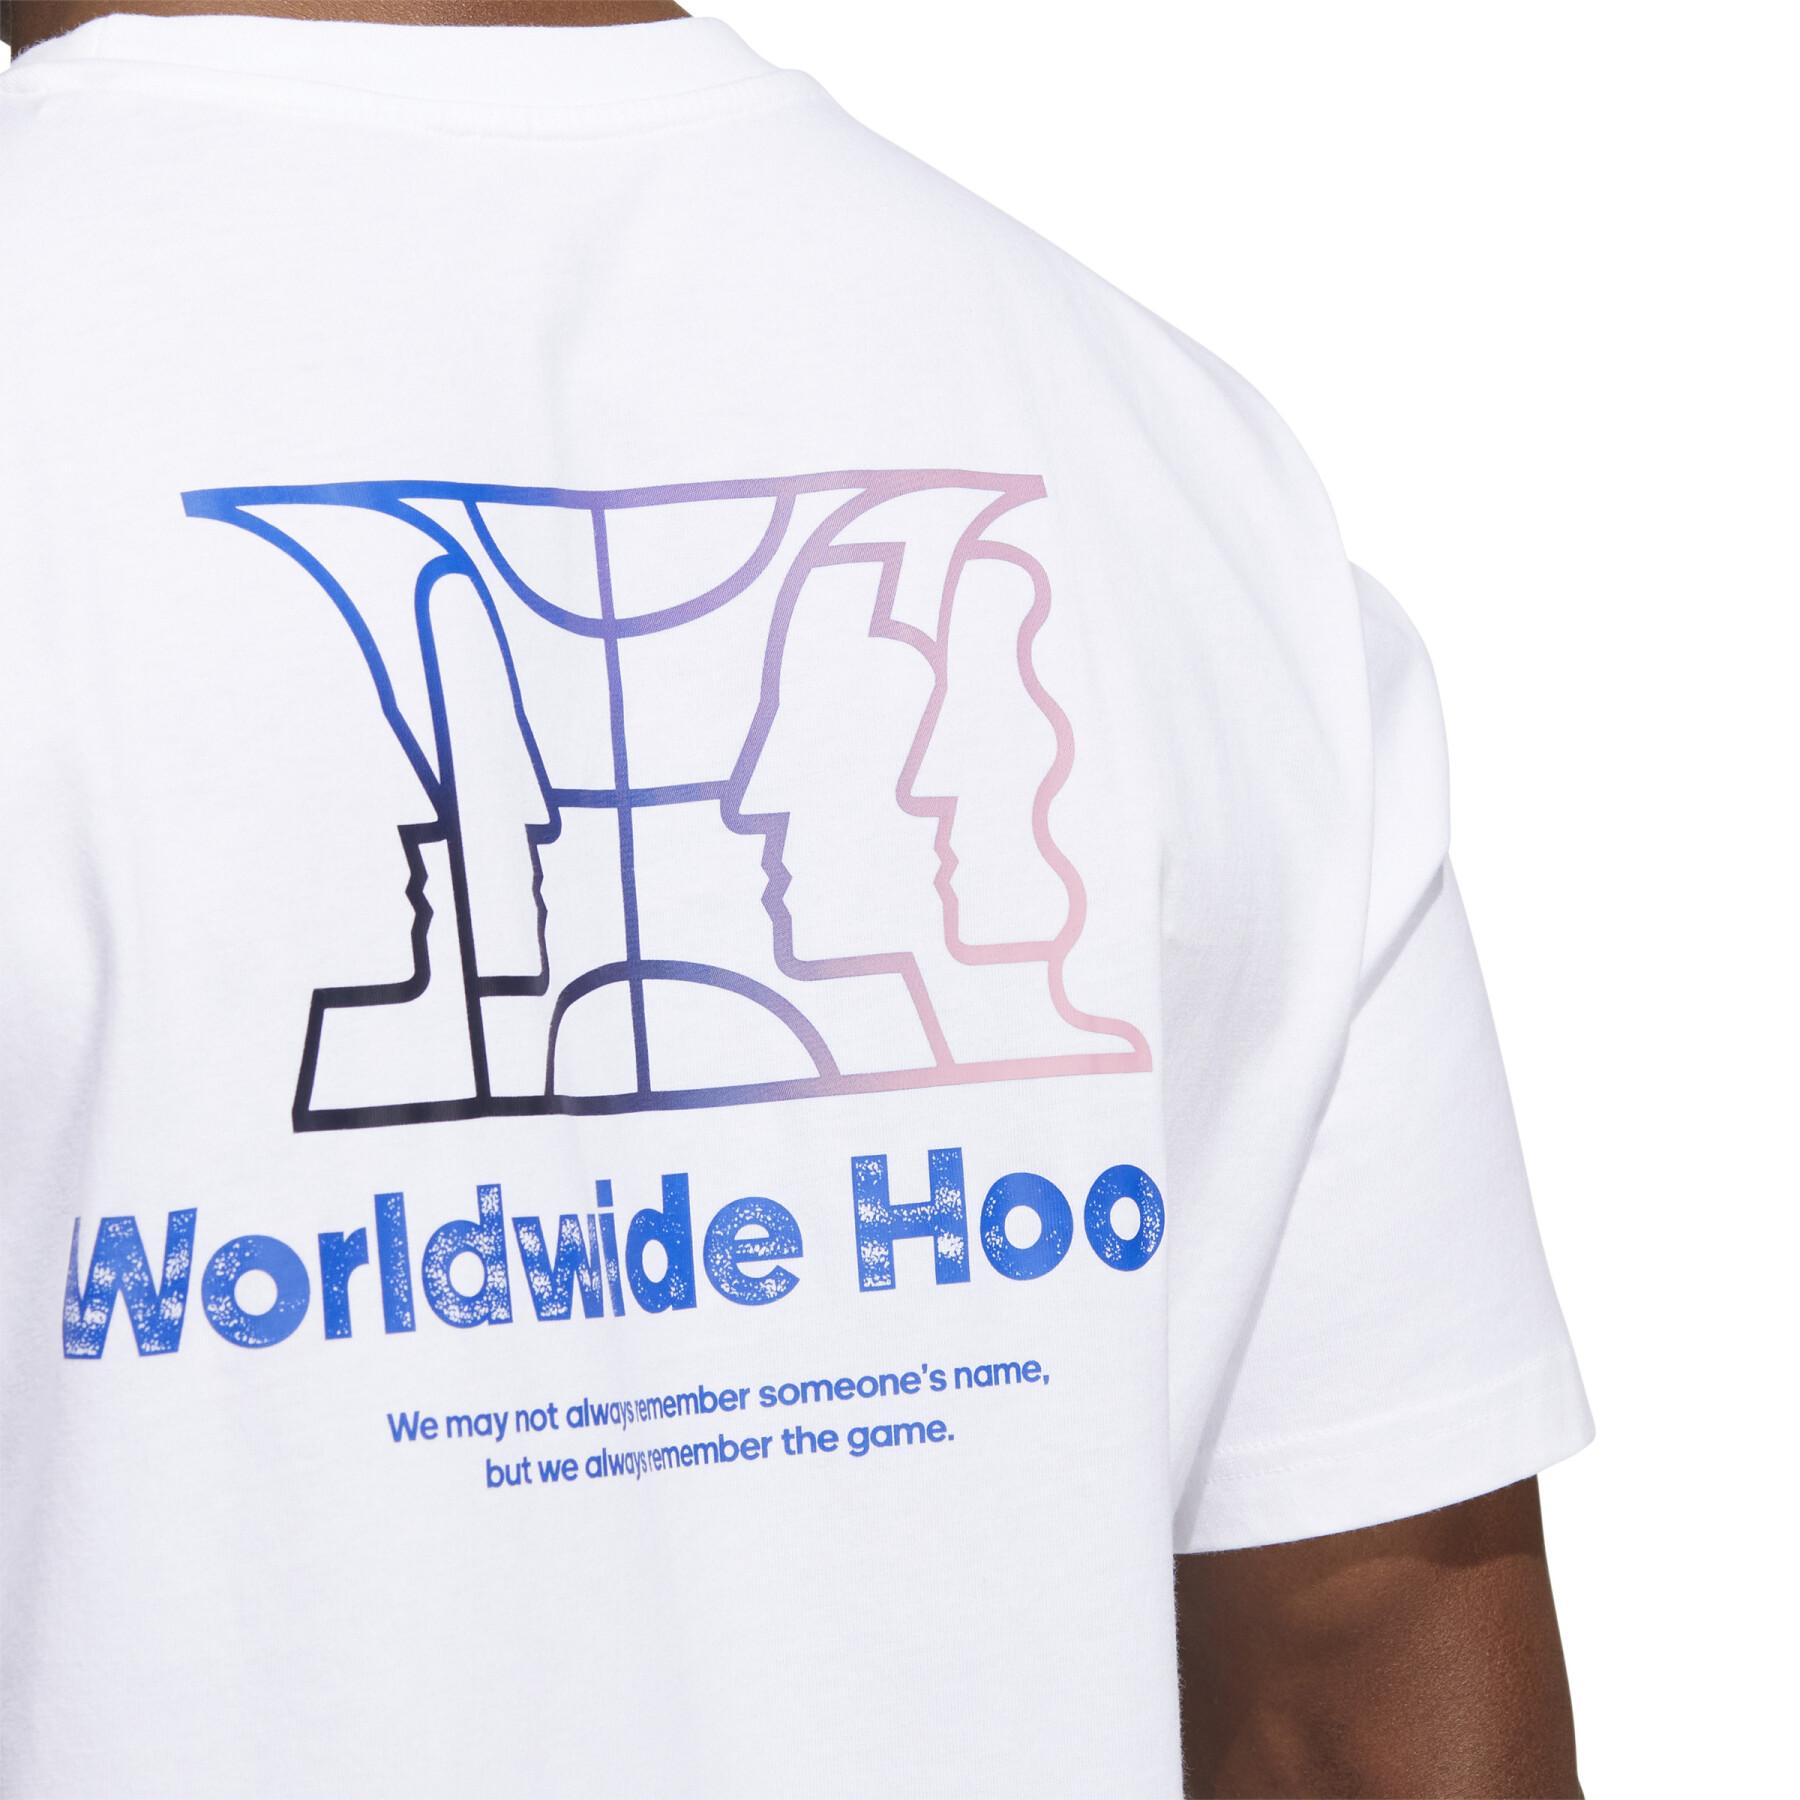 Camiseta adidas Originals Worldwide Hoops Story Graphic